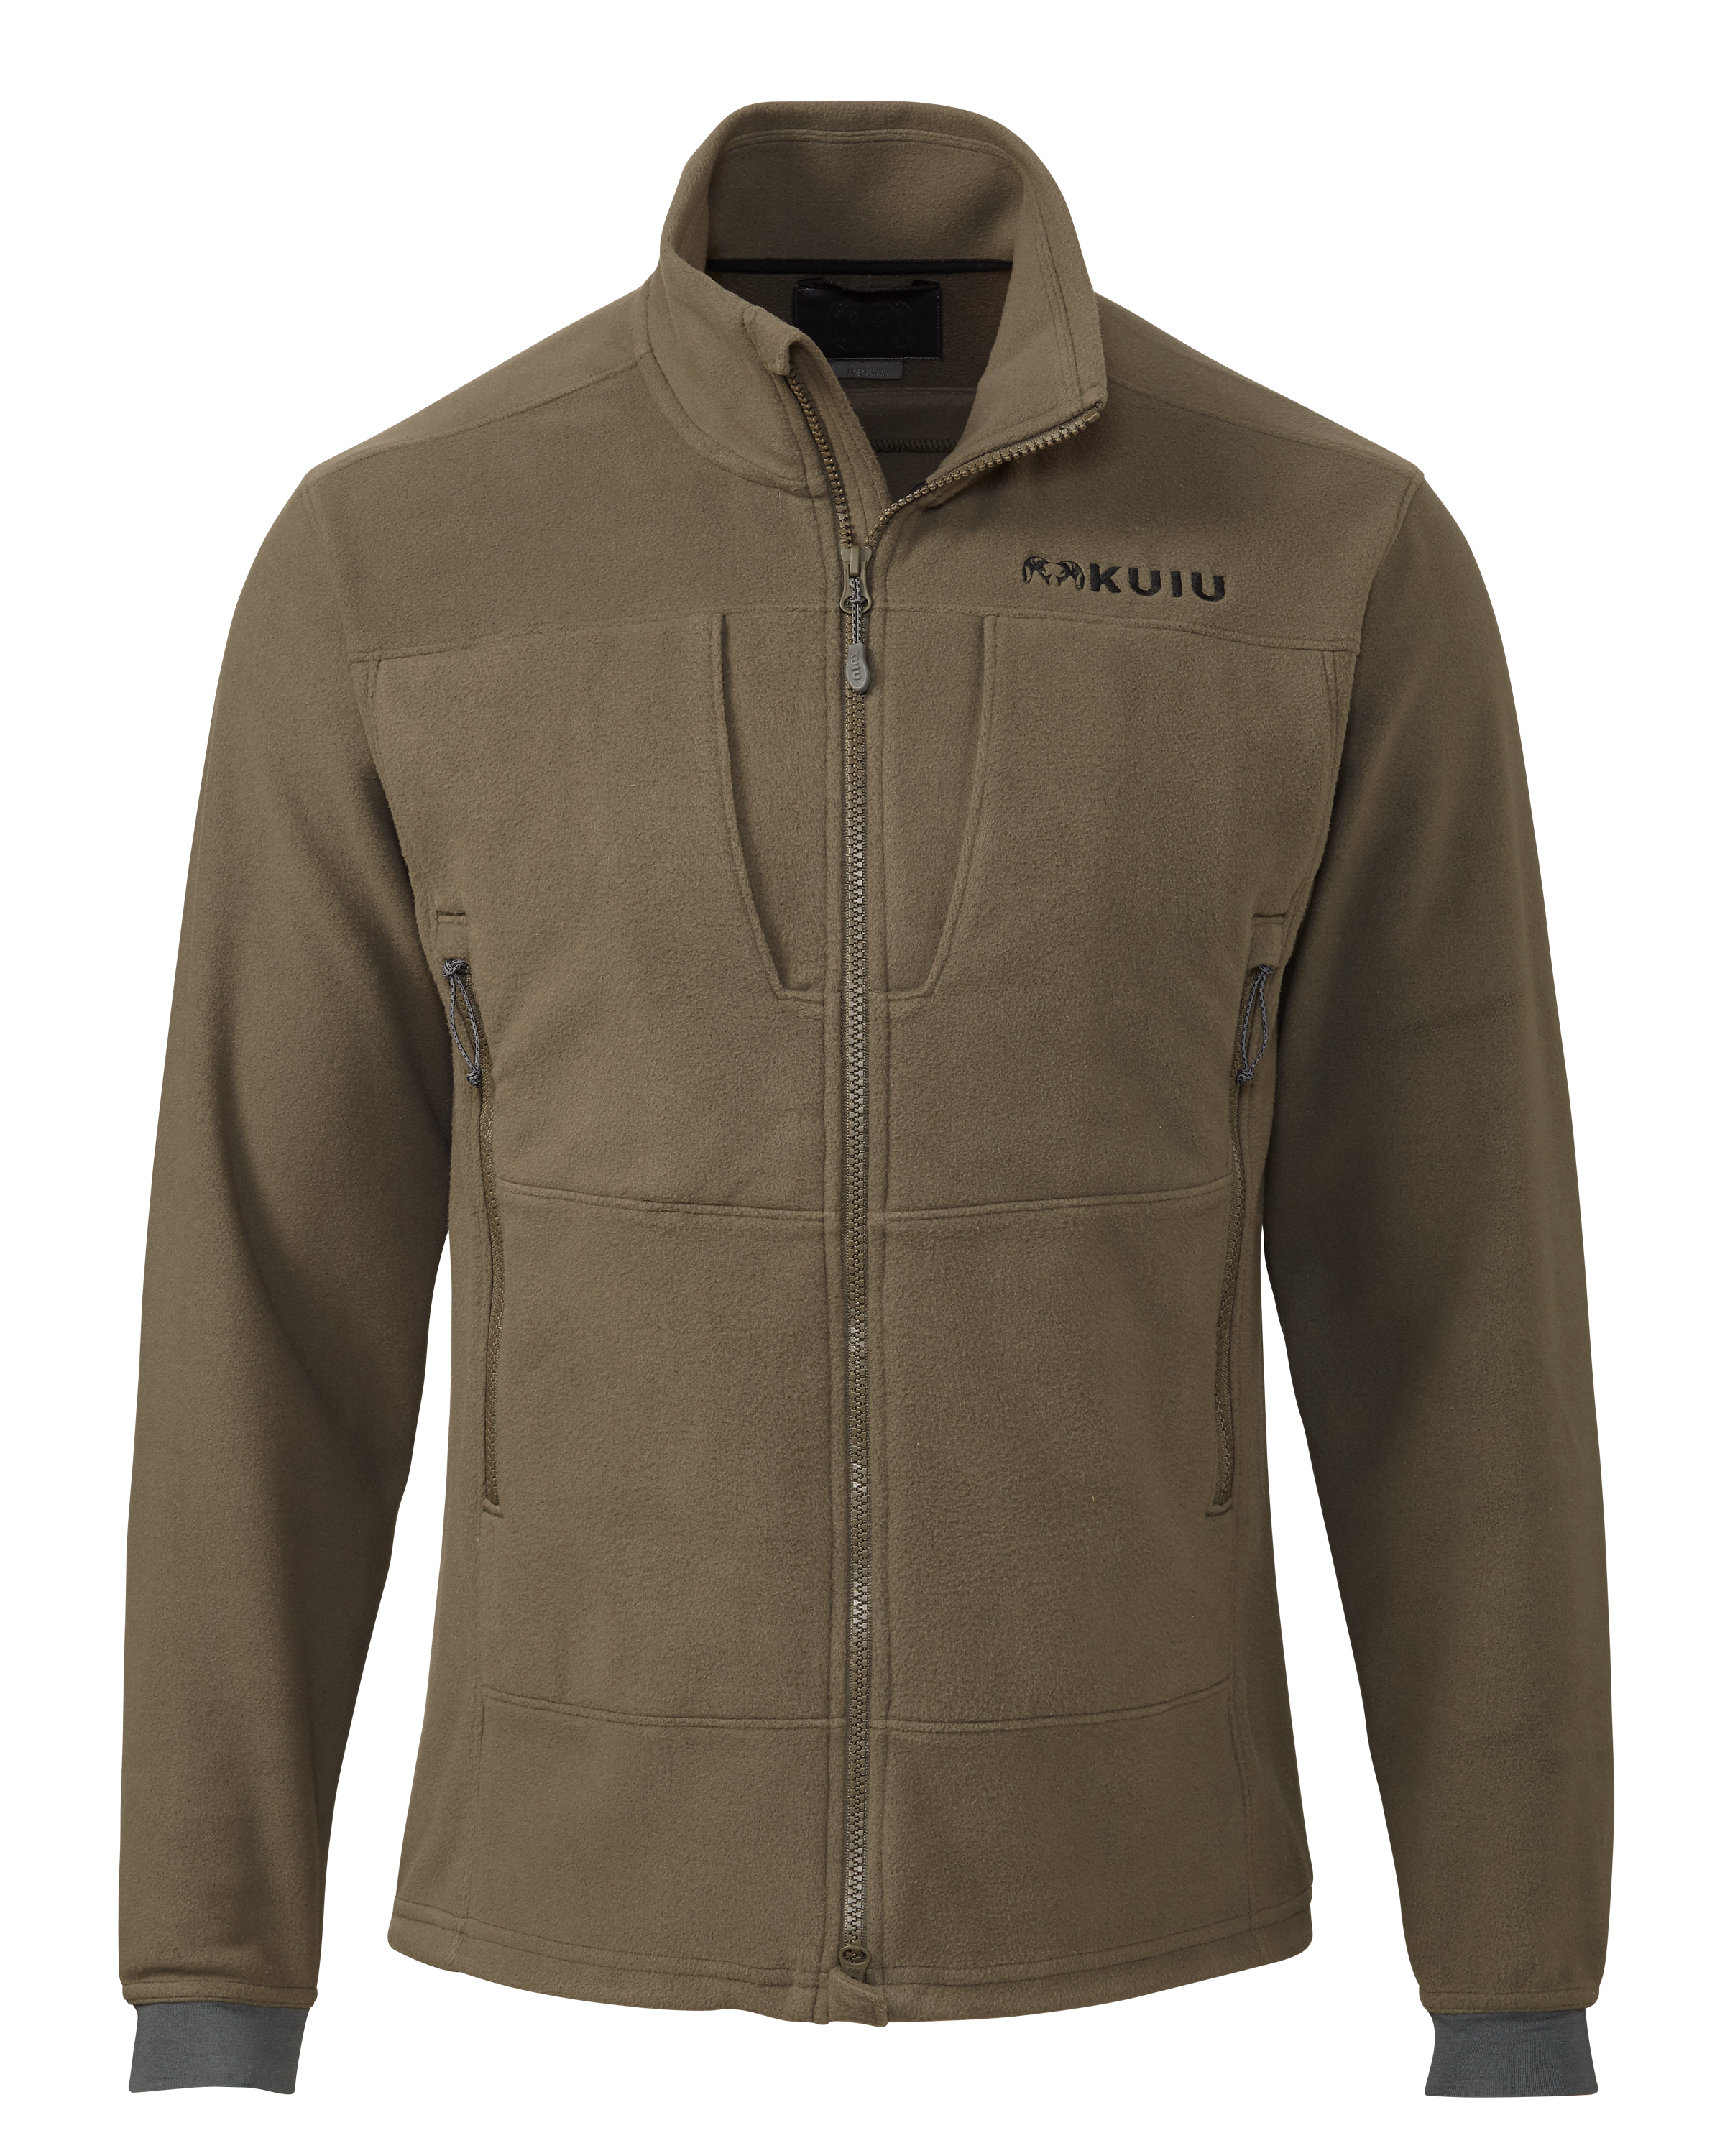 KUIU Wind Pro Fleece Full Zip Hunting Jacket in Ash | Small